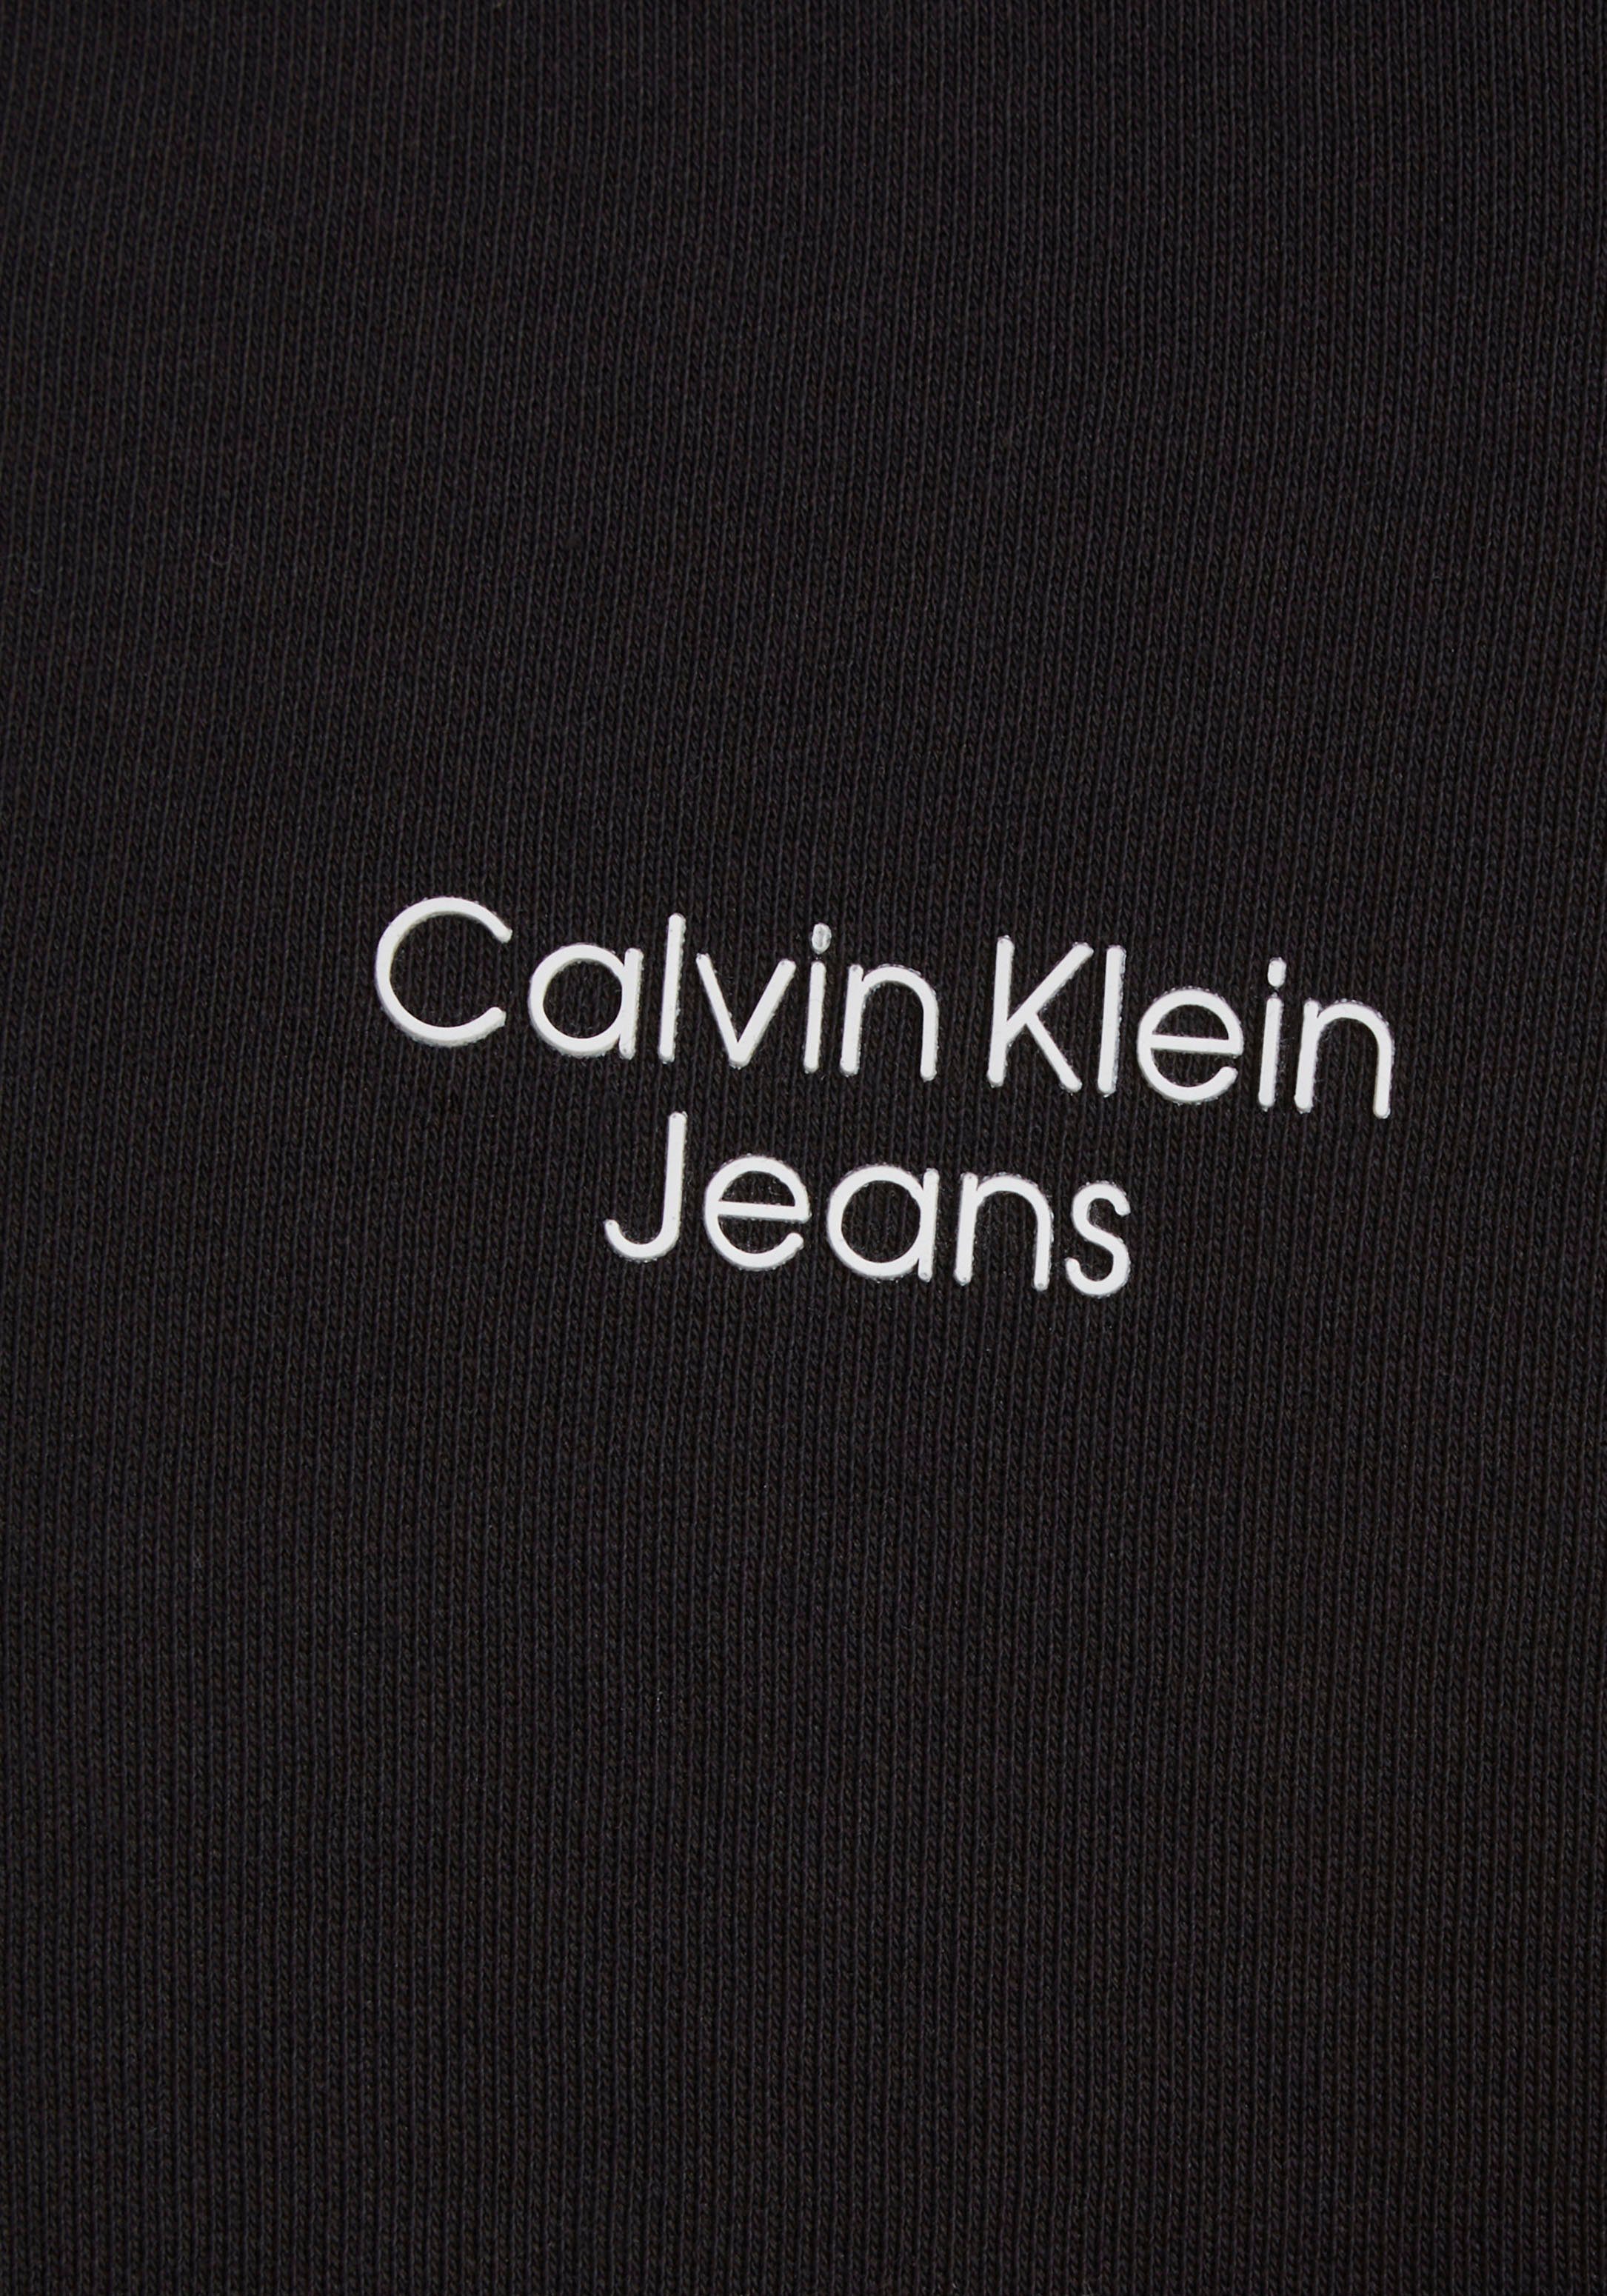 Calvin Klein STACK CKJ Jeans SWEATSHIRT Sweatshirt LOGO